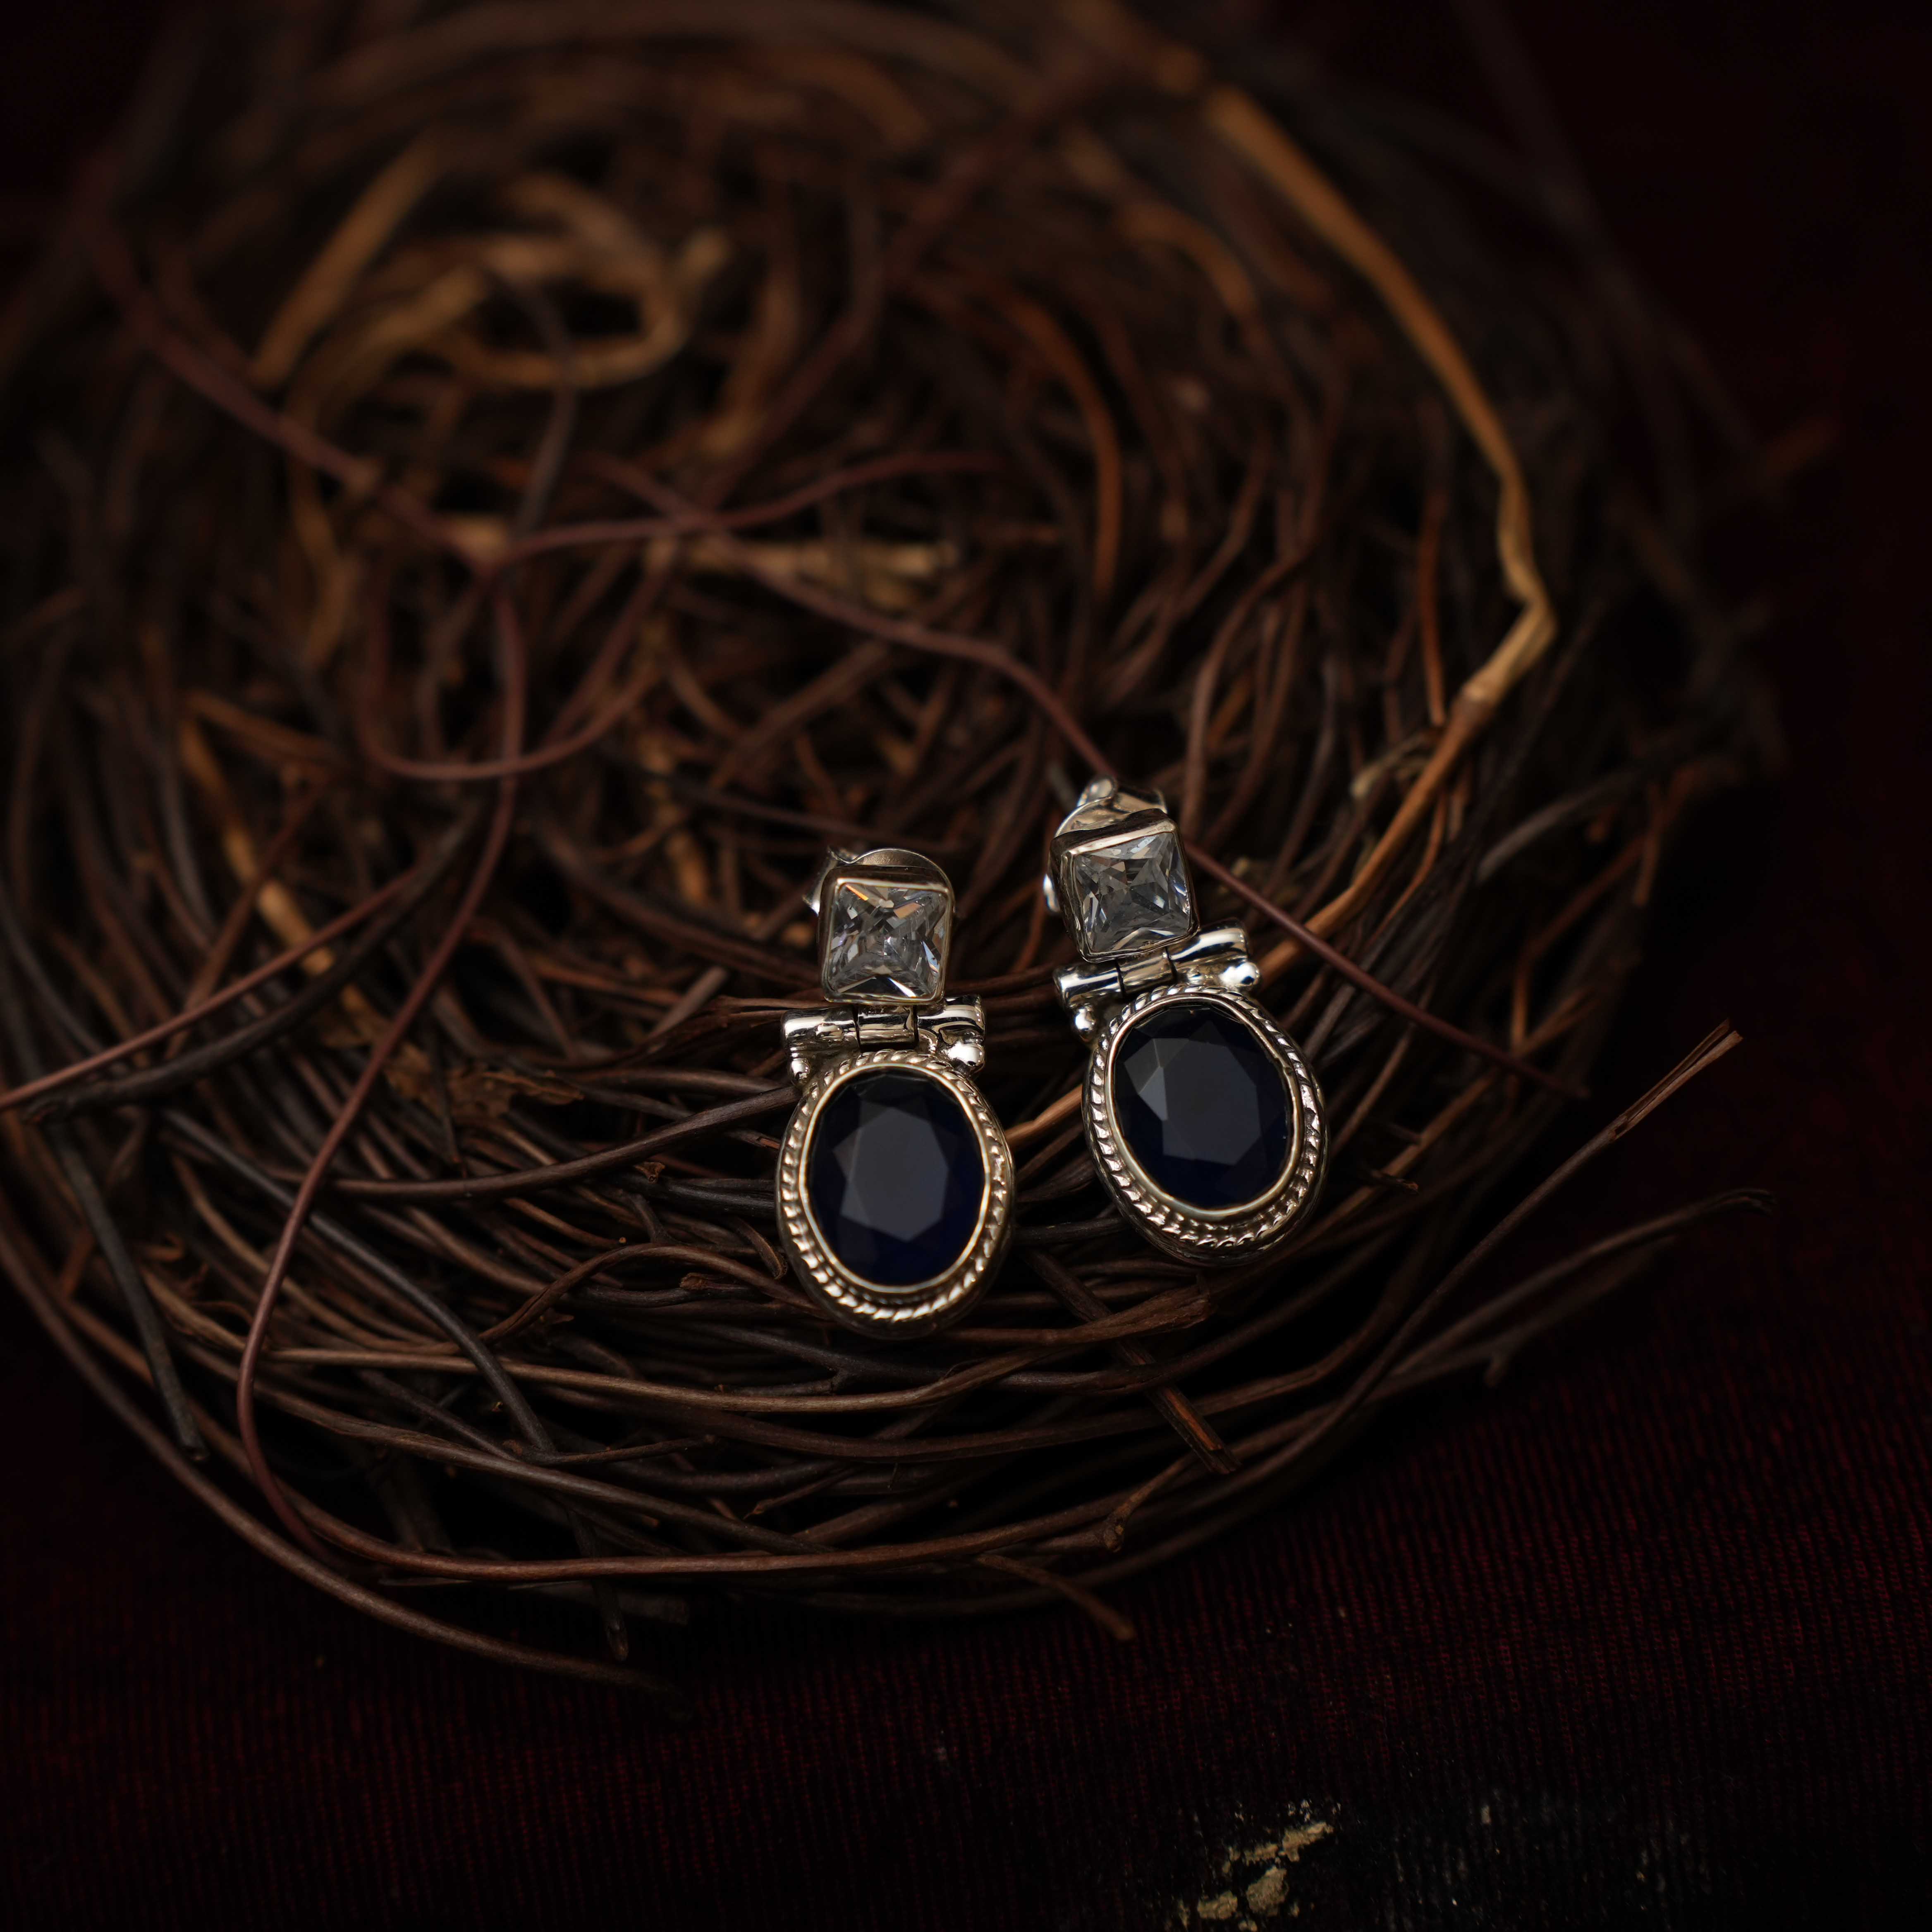 Radhi 925 Oxidized Silver Earrings - Blue